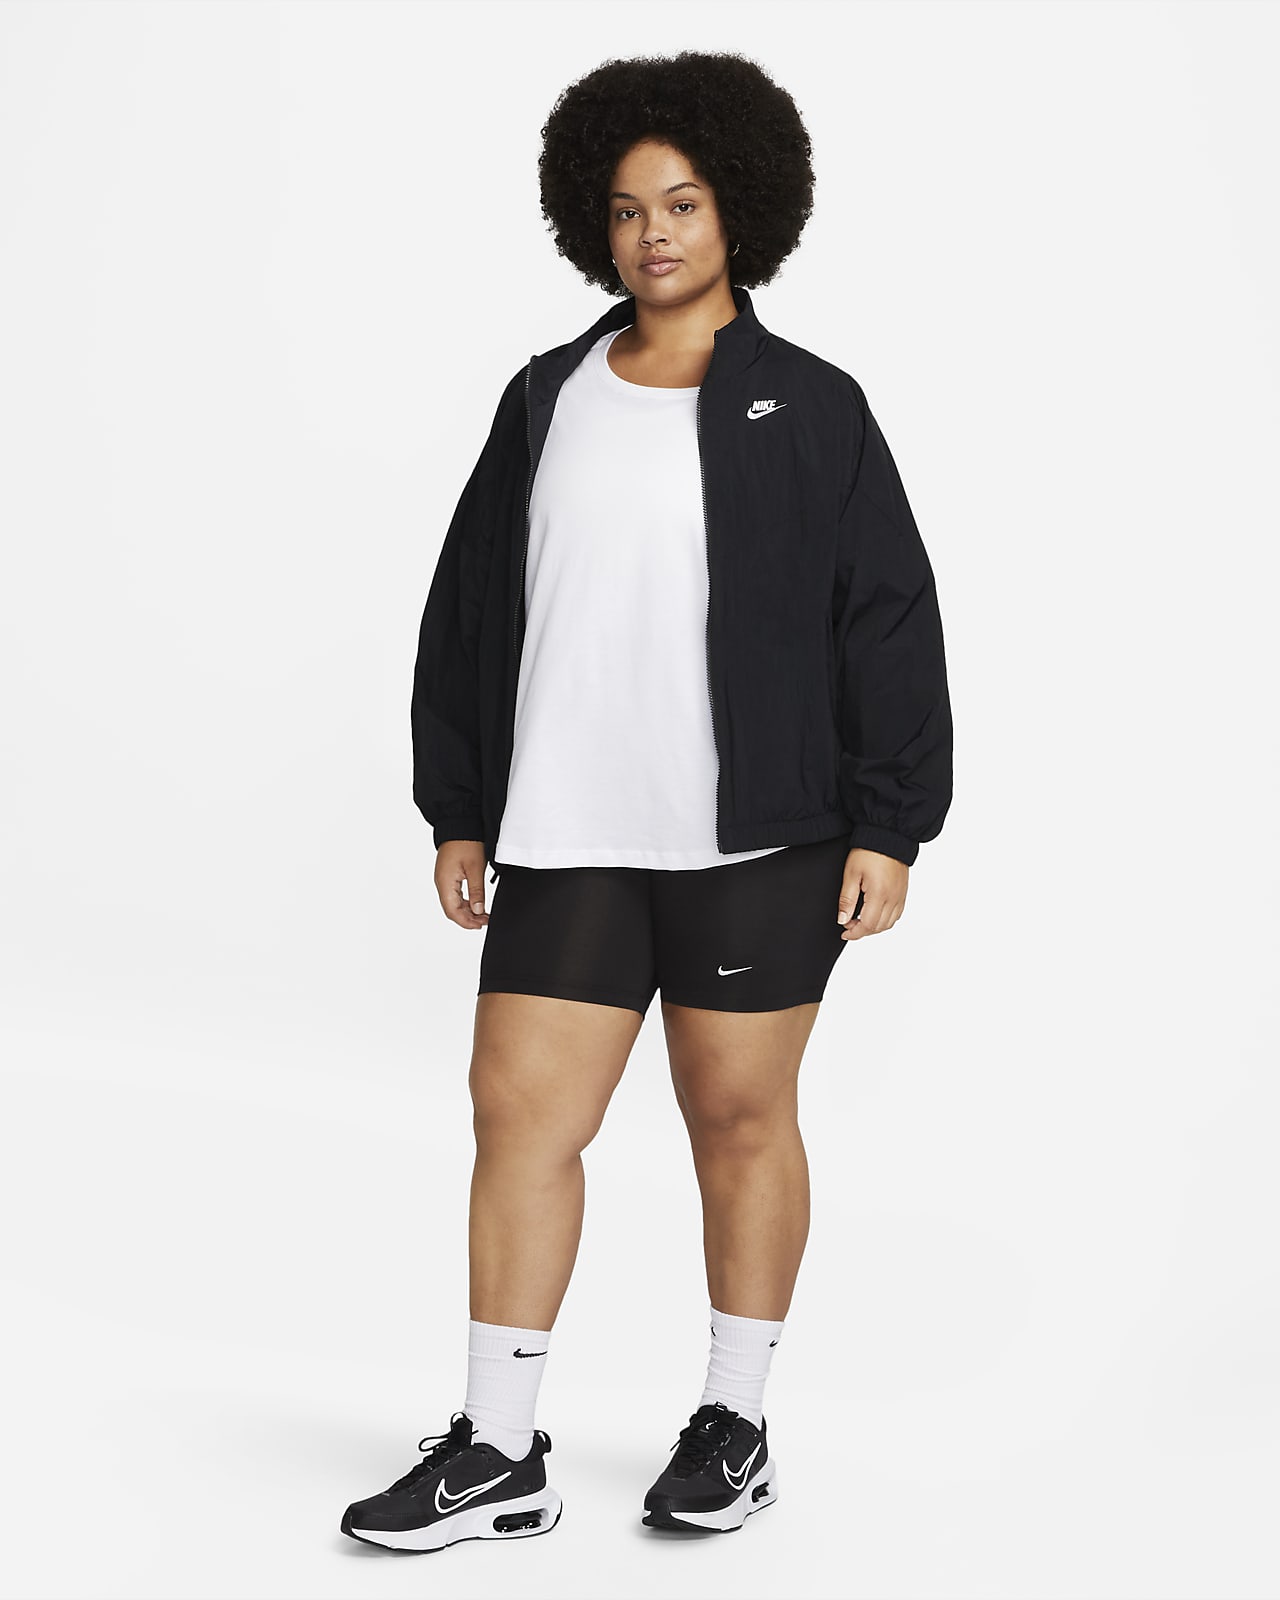 Tee-shirt Nike Sportswear Club Essentials pour femme